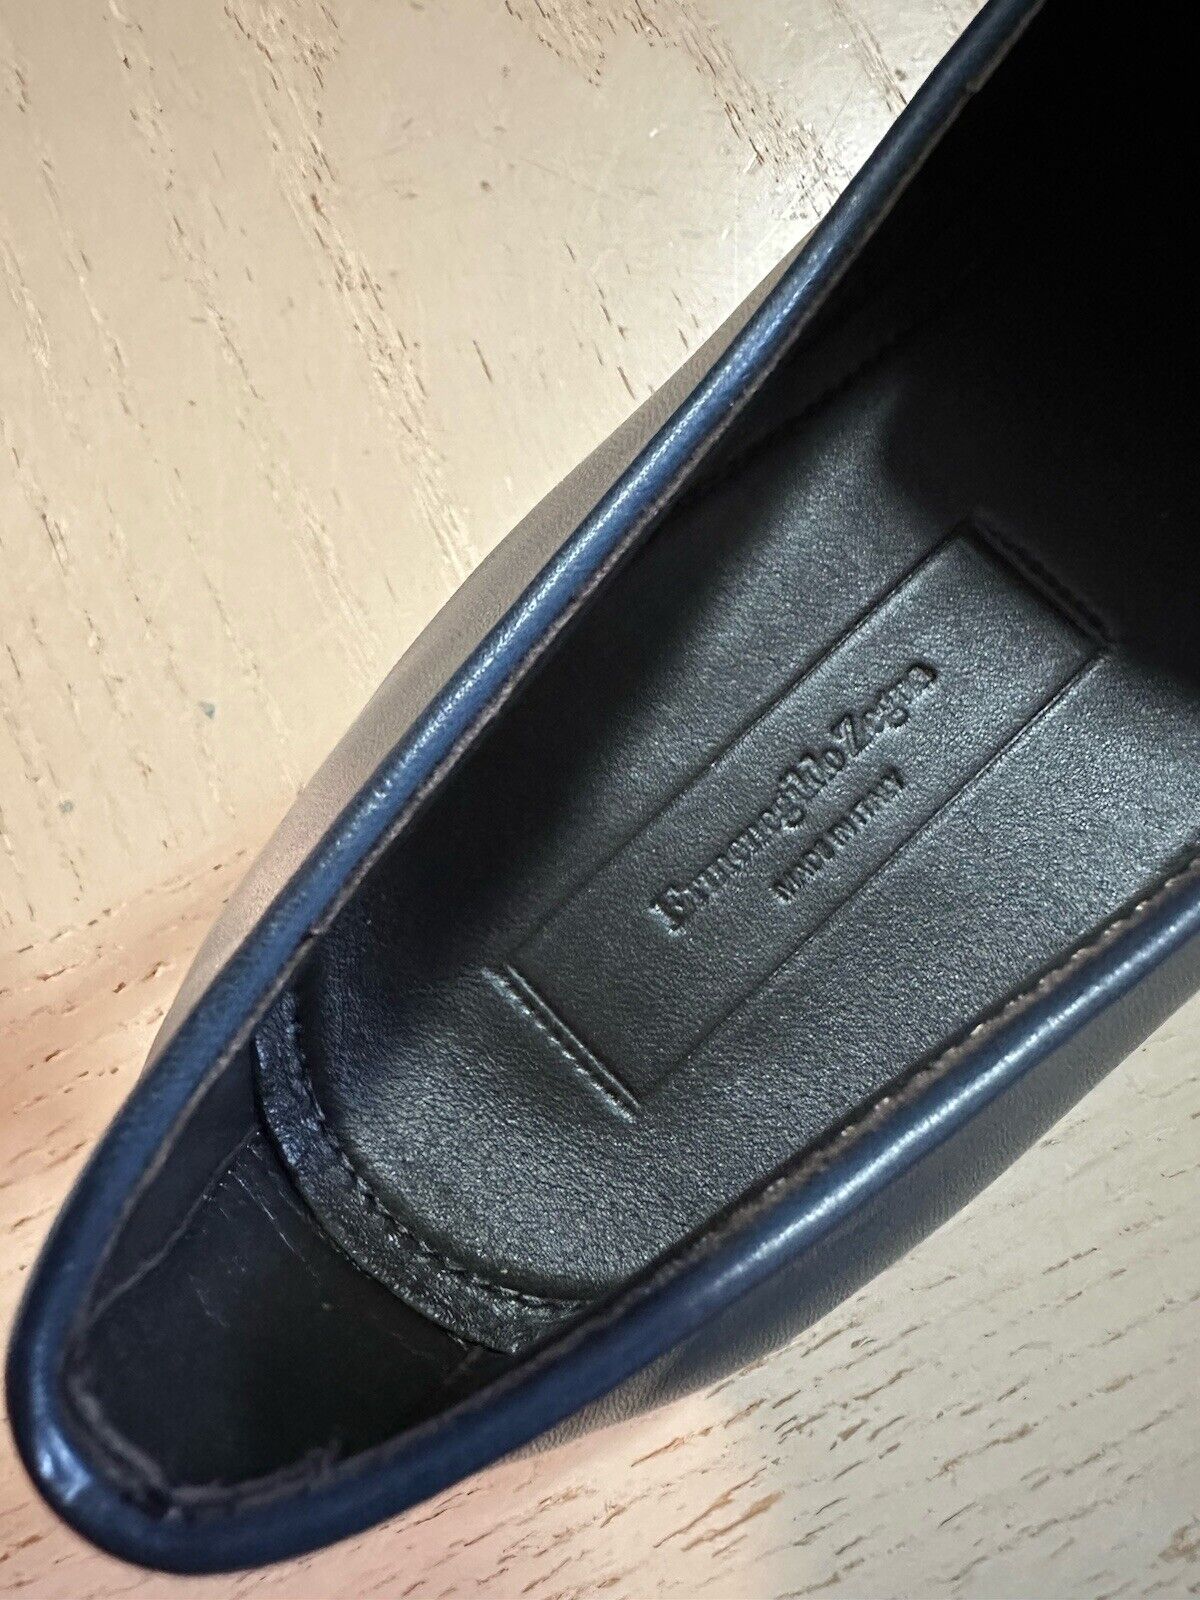 Ermenegildo Zegna Leather Reverse Construction Loafers DK Blue 10 US New $950